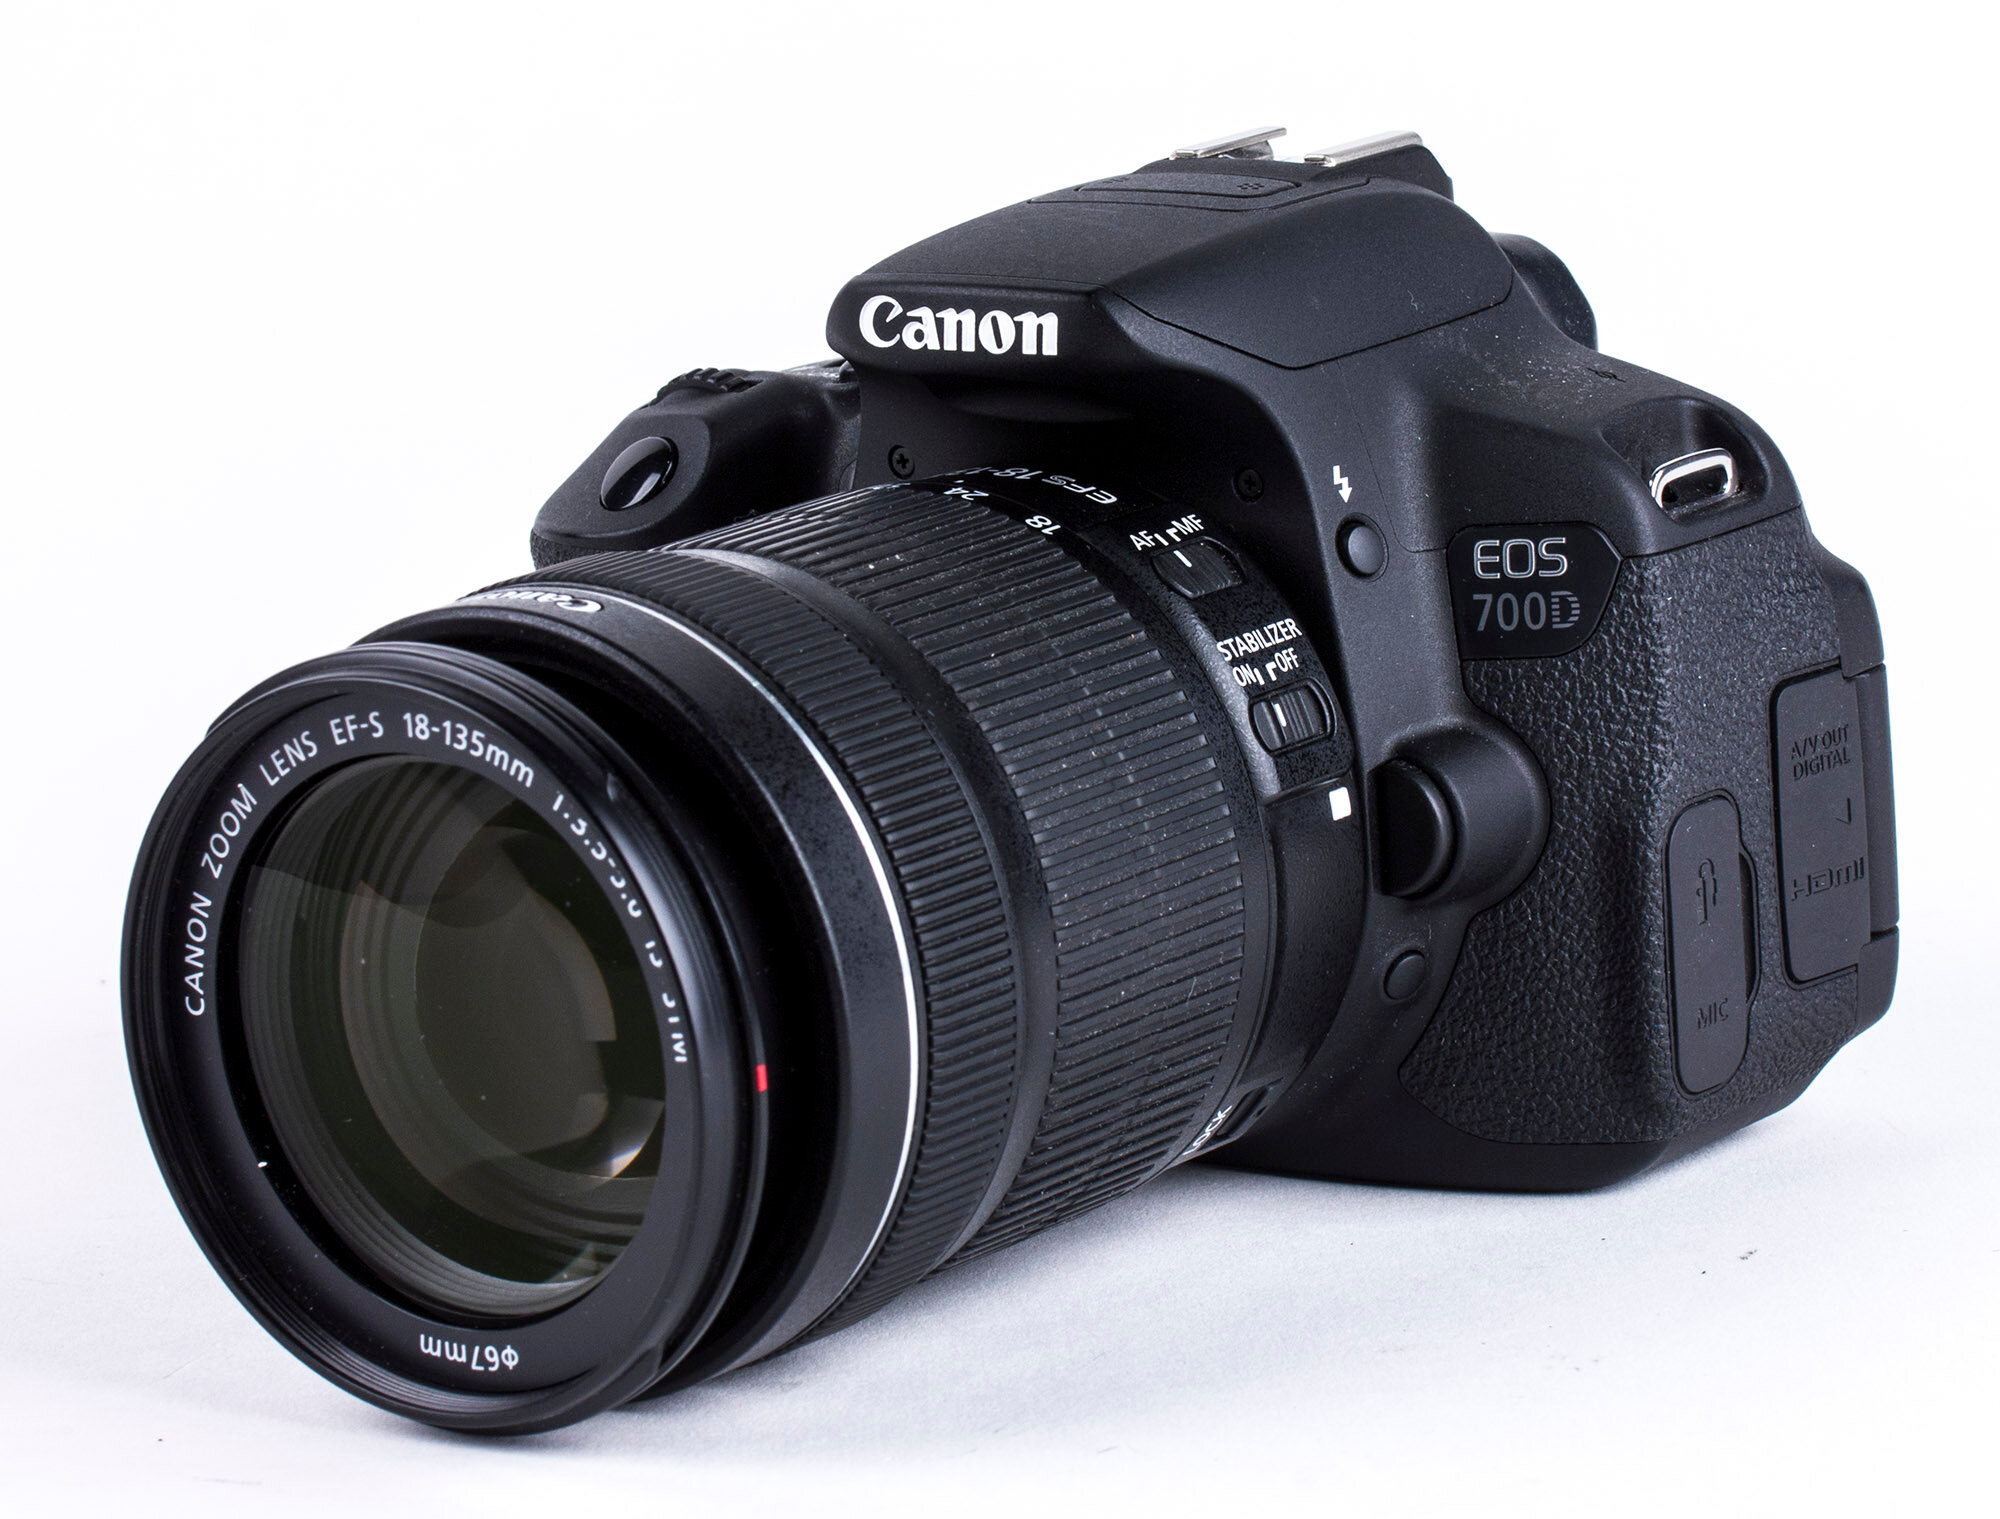 Объектив Canon EF-S 55-250mm f/4-56 IS